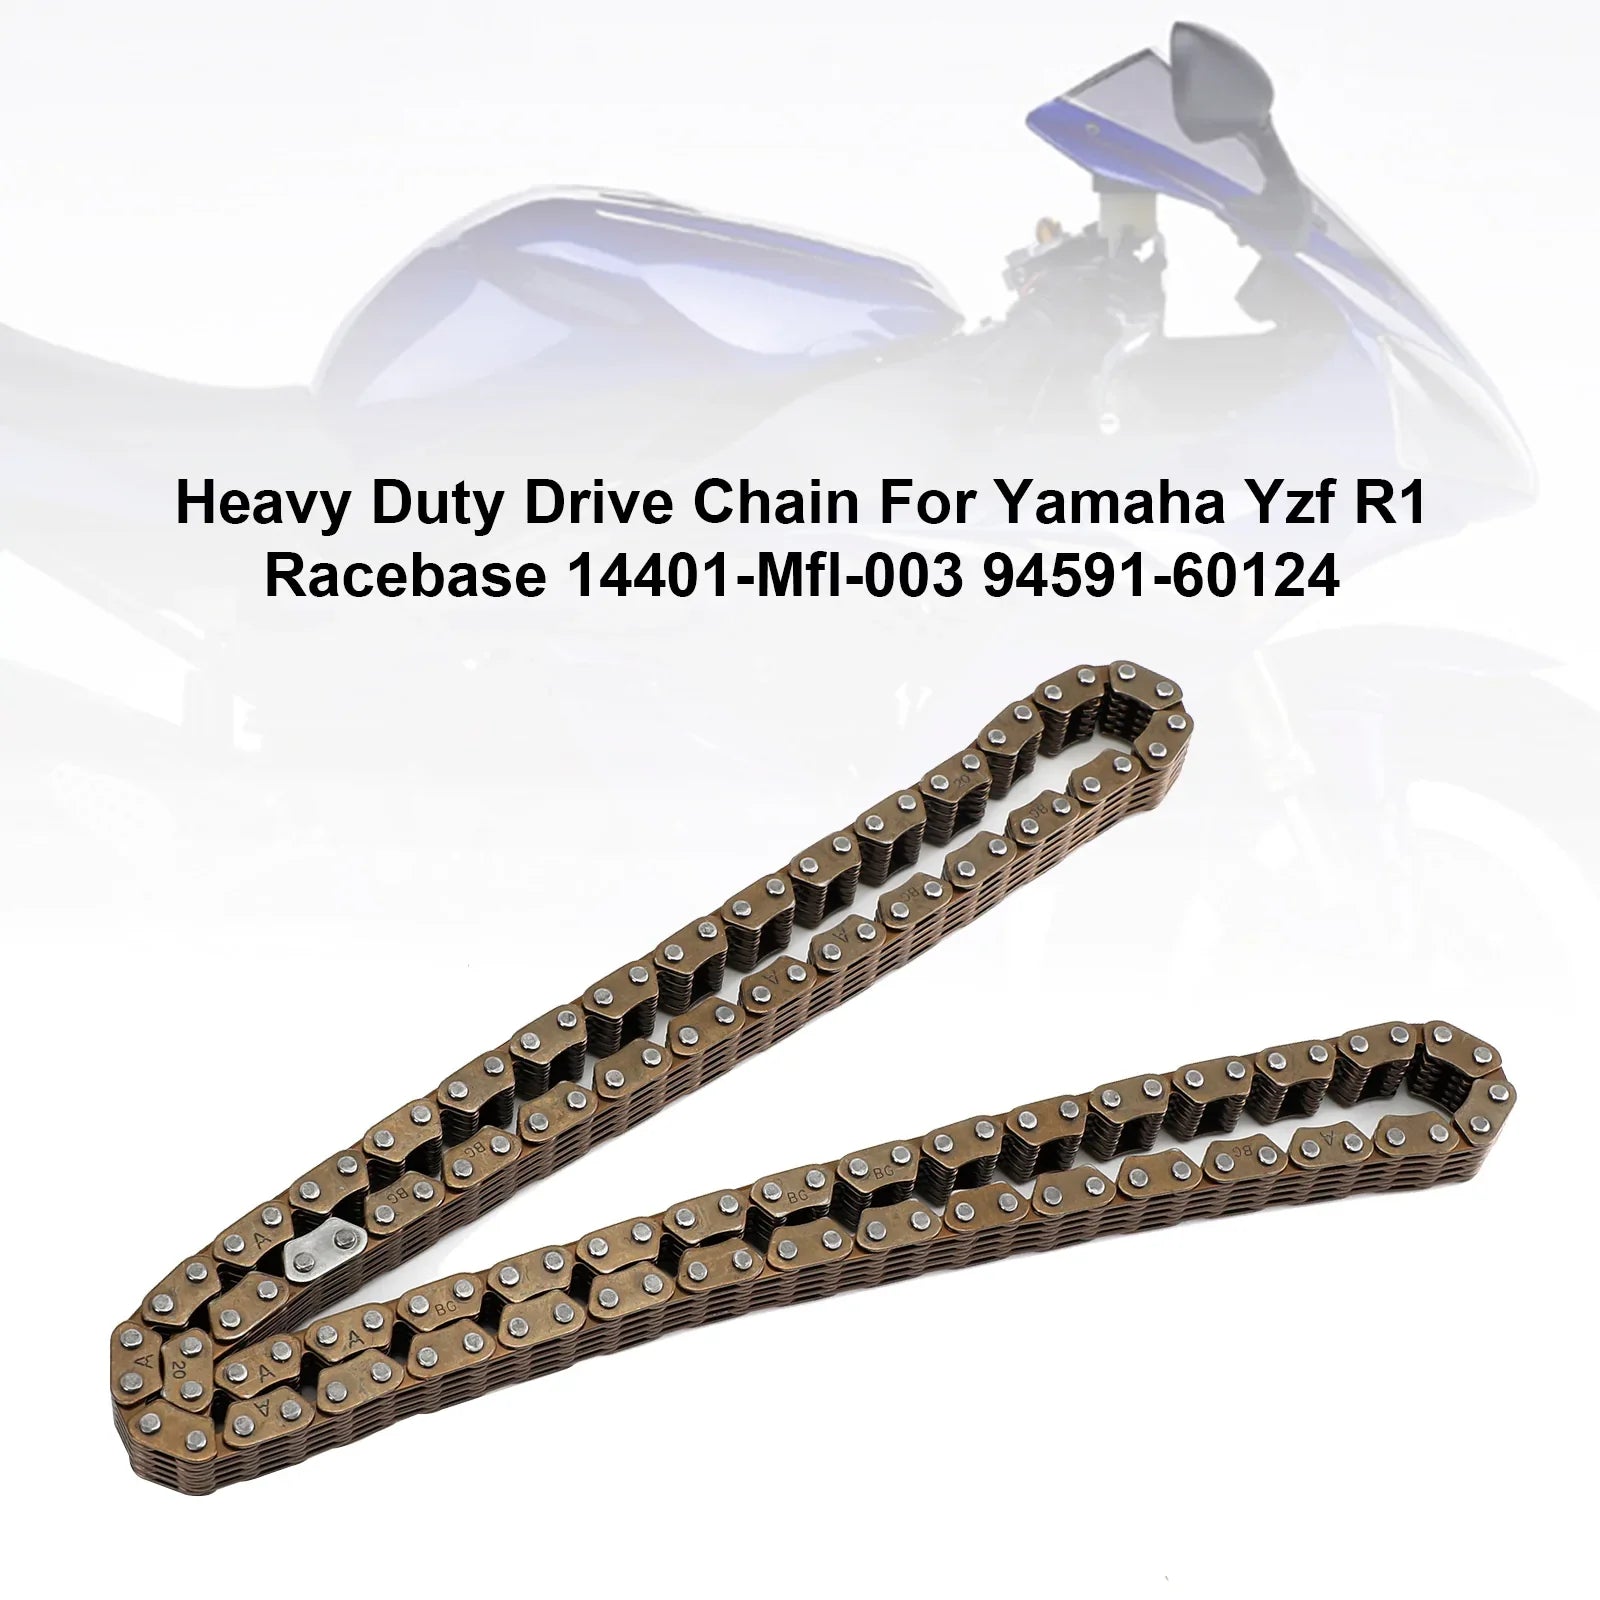 Yamaha Yzf R1 Racebase 14401-Mfl-003 94591-60124 Catena di distribuzione per impieghi gravosi